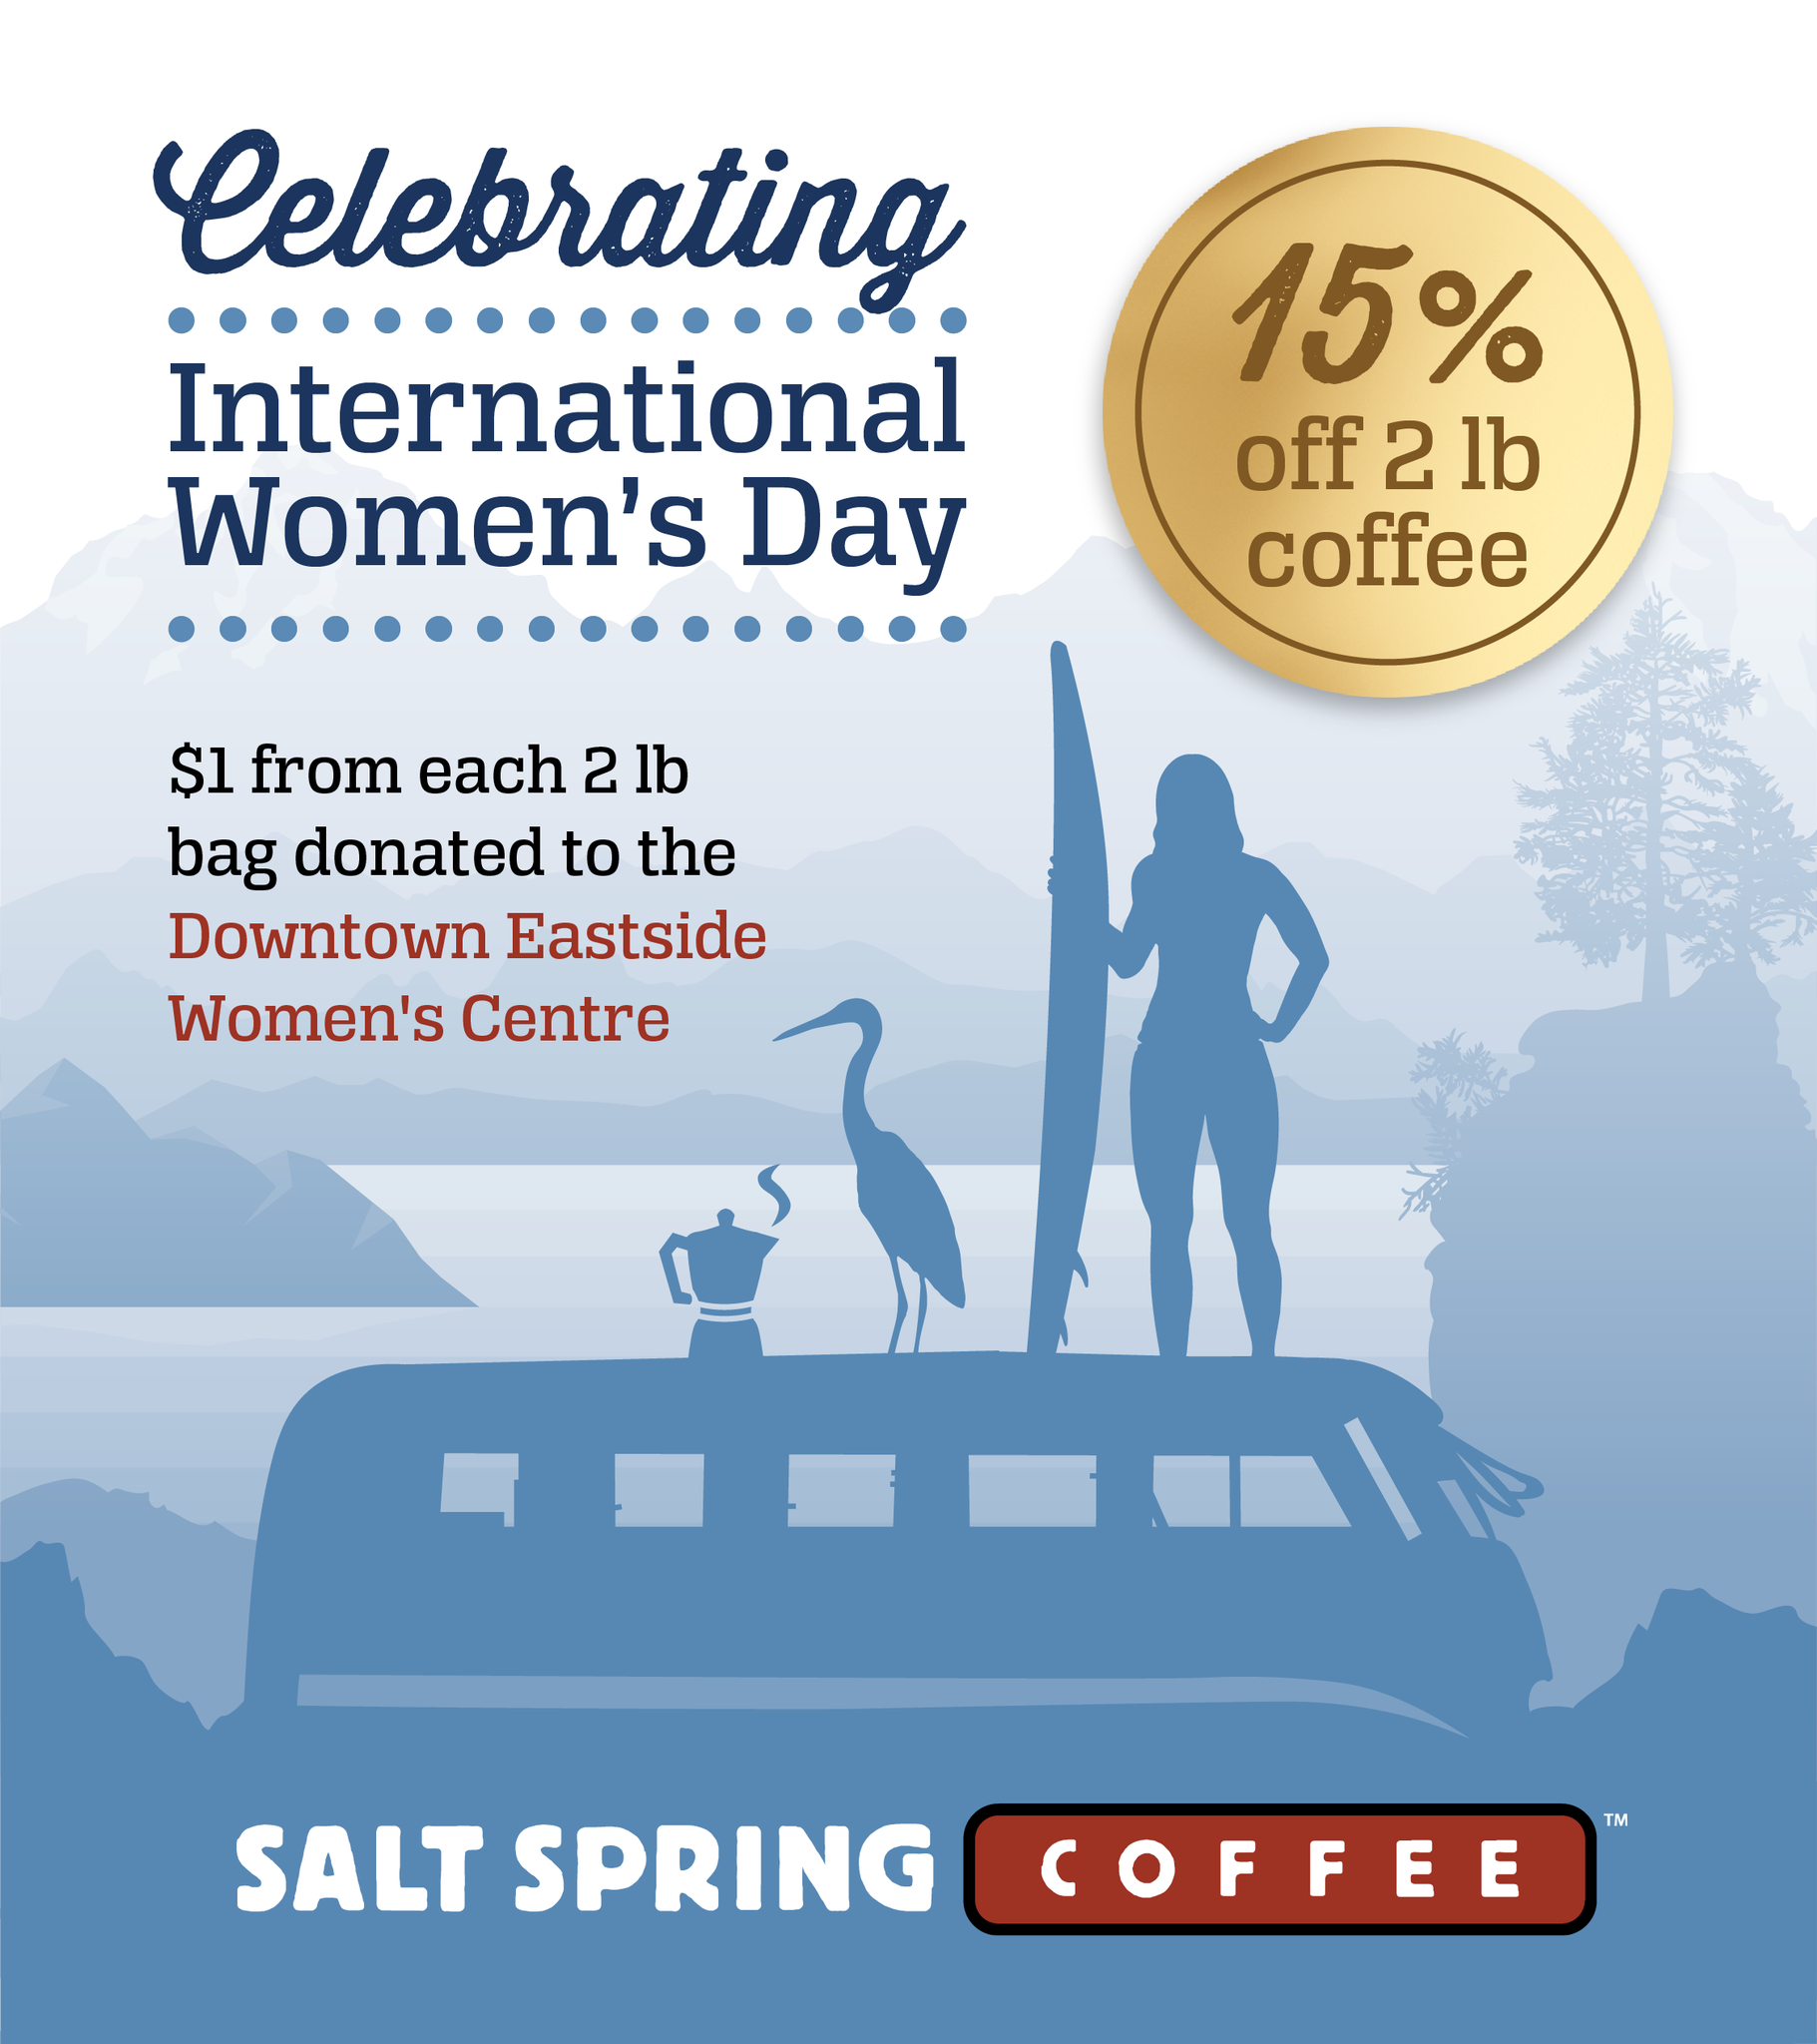 Save 15% on 2lb Coffee